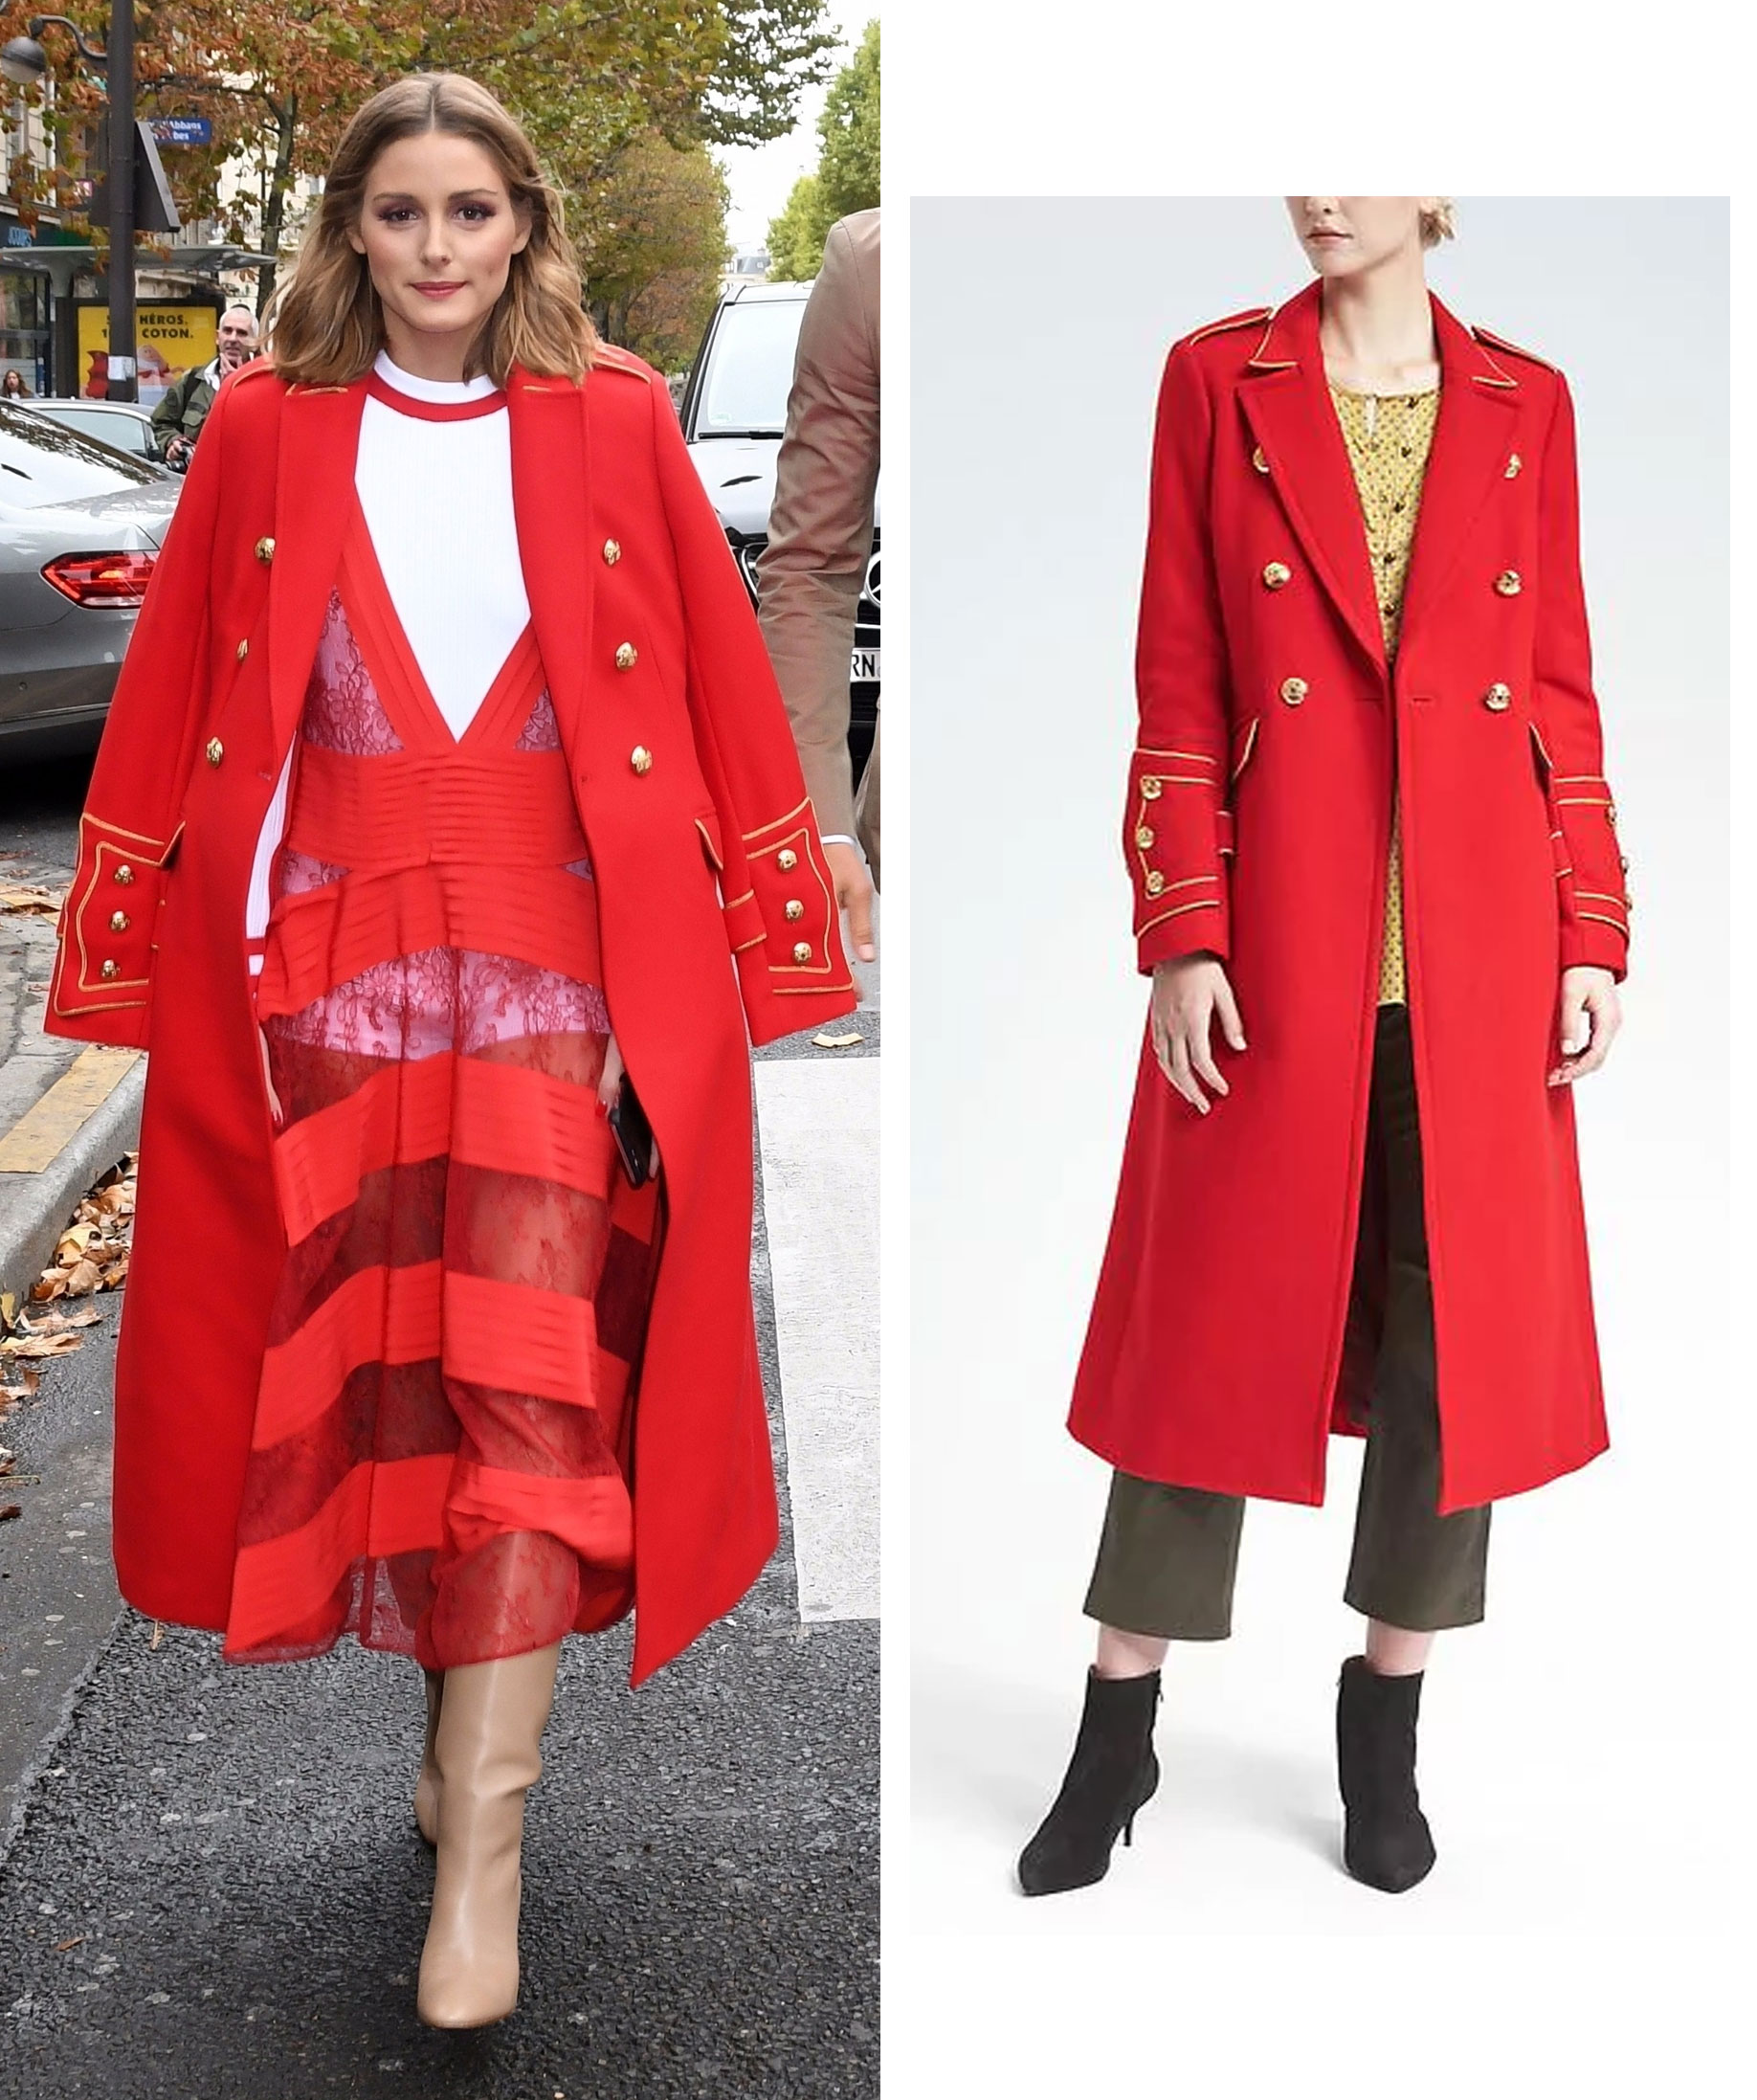 Shop Olivia Palermo's exact coat under $400 at Banana Republic.